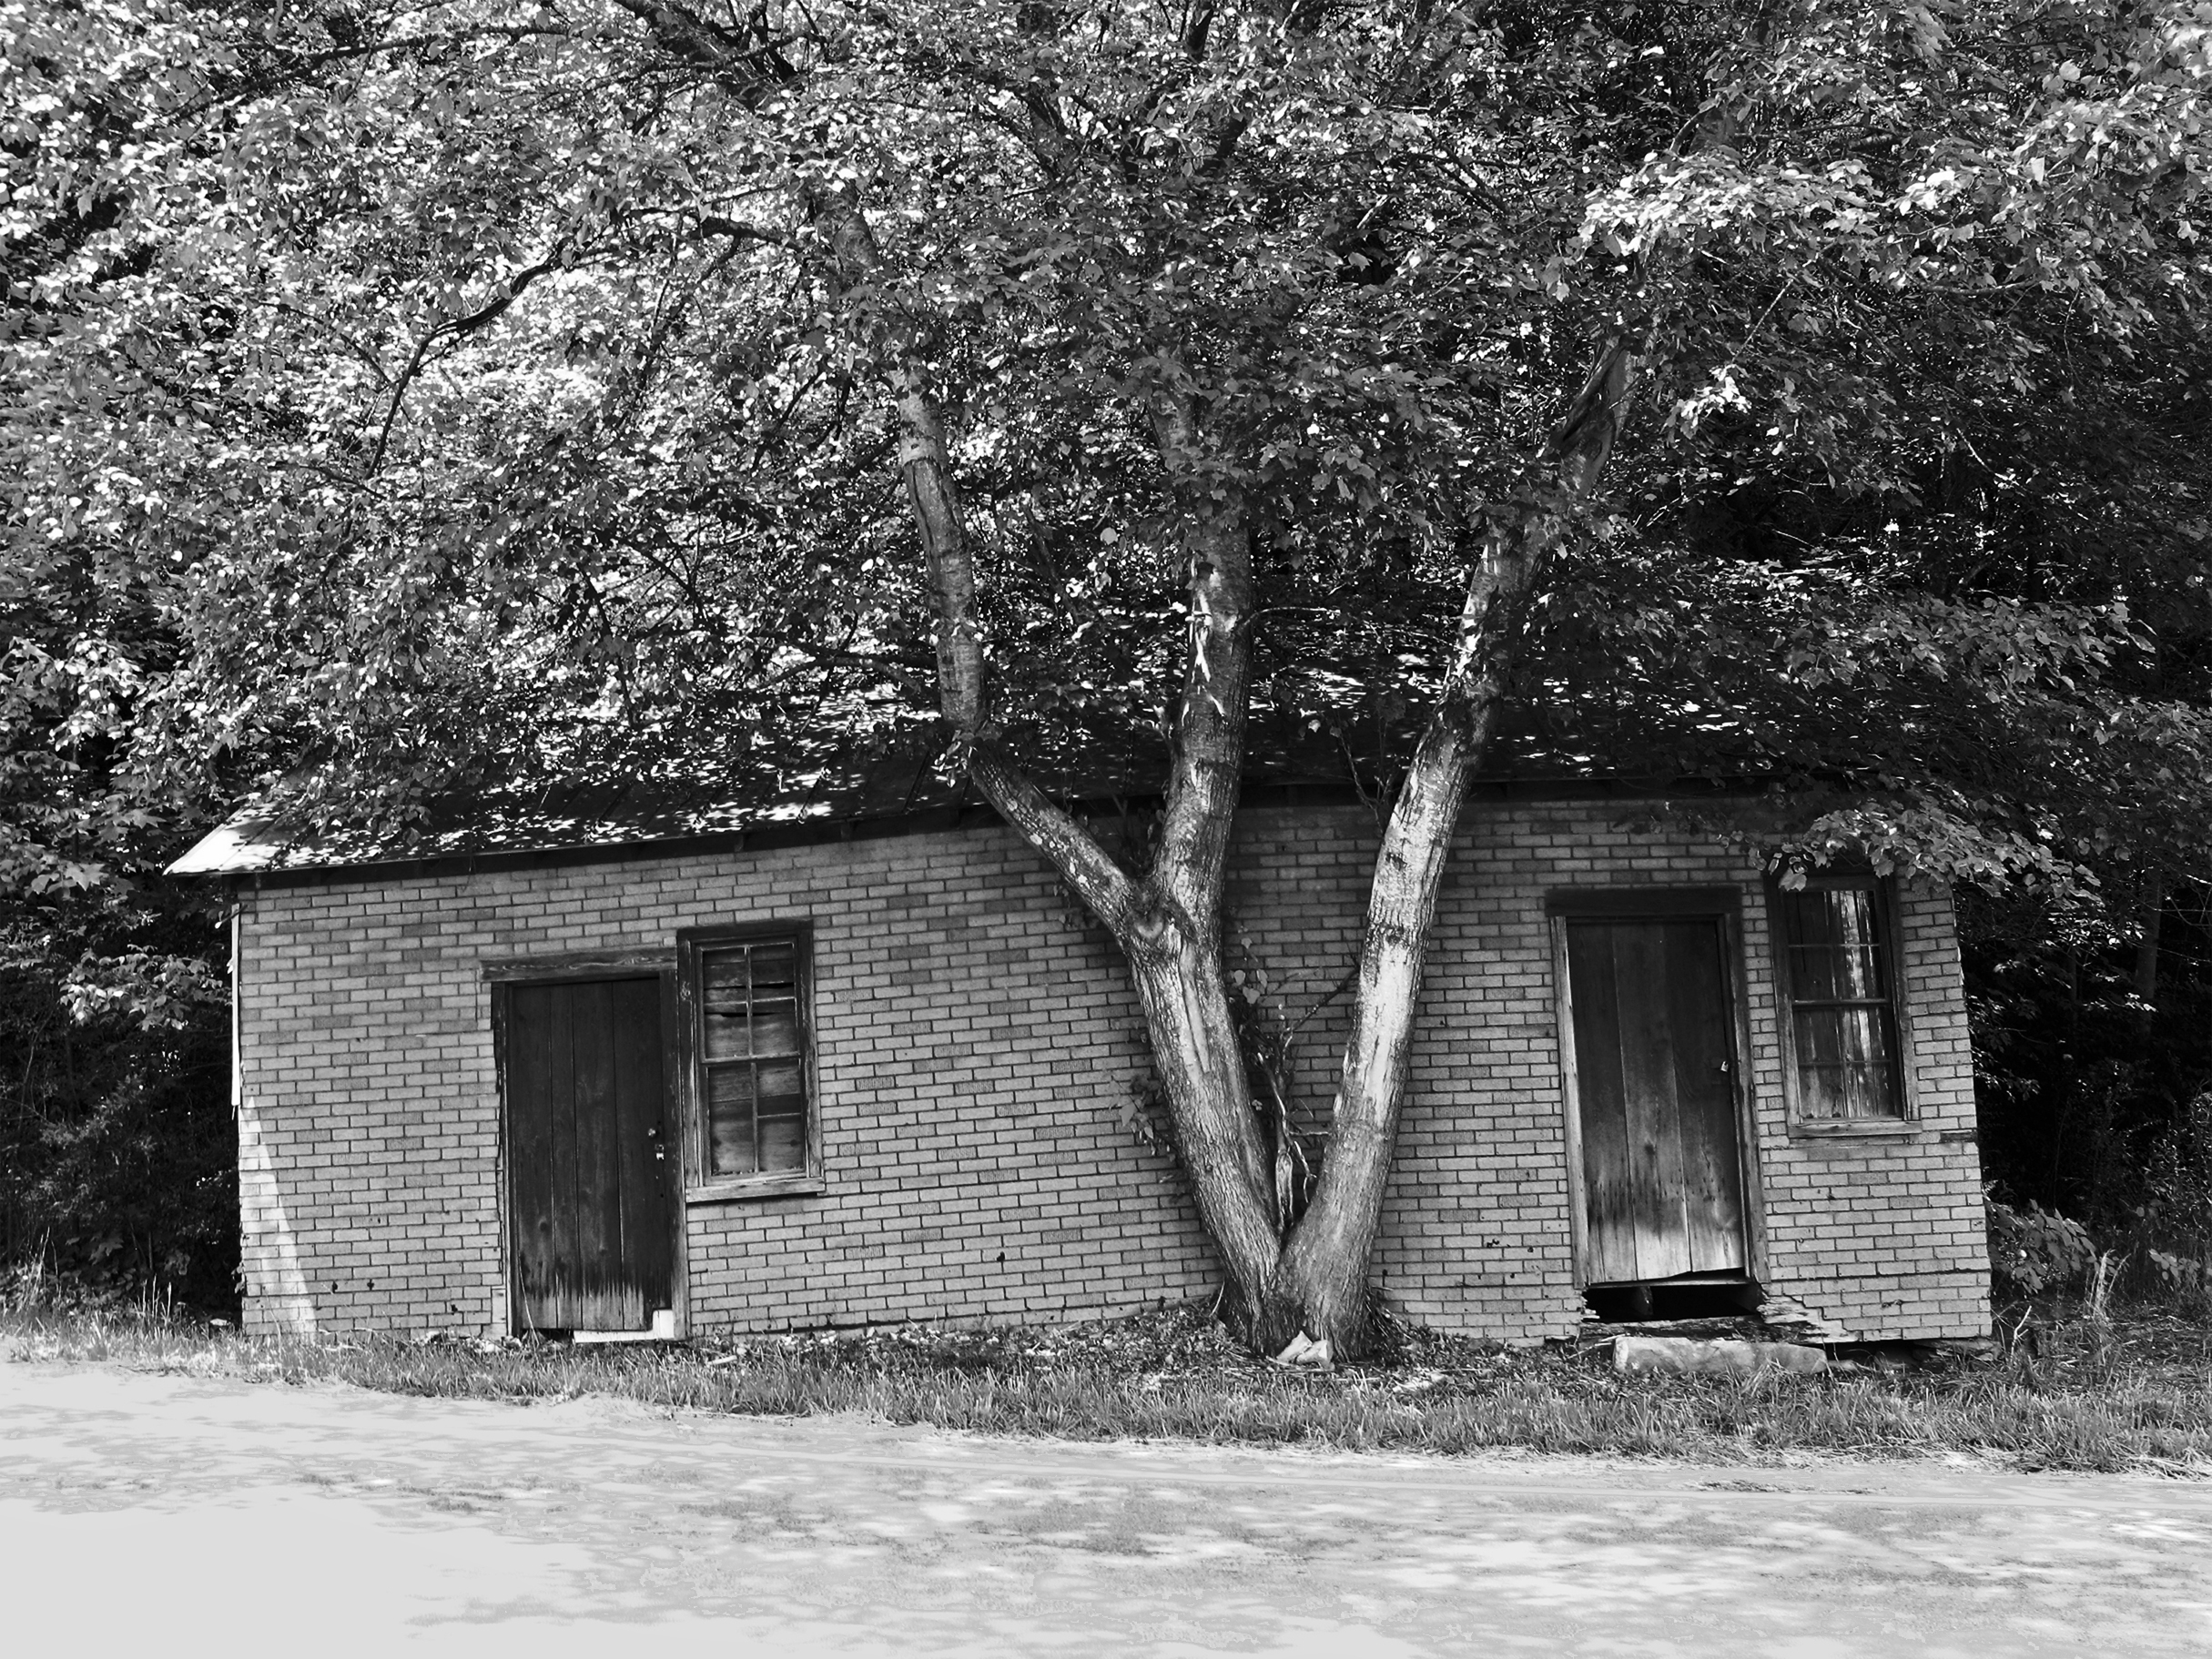    Tree House  , Fannin County, GA, 2013. B&amp;W HDR digital image. 